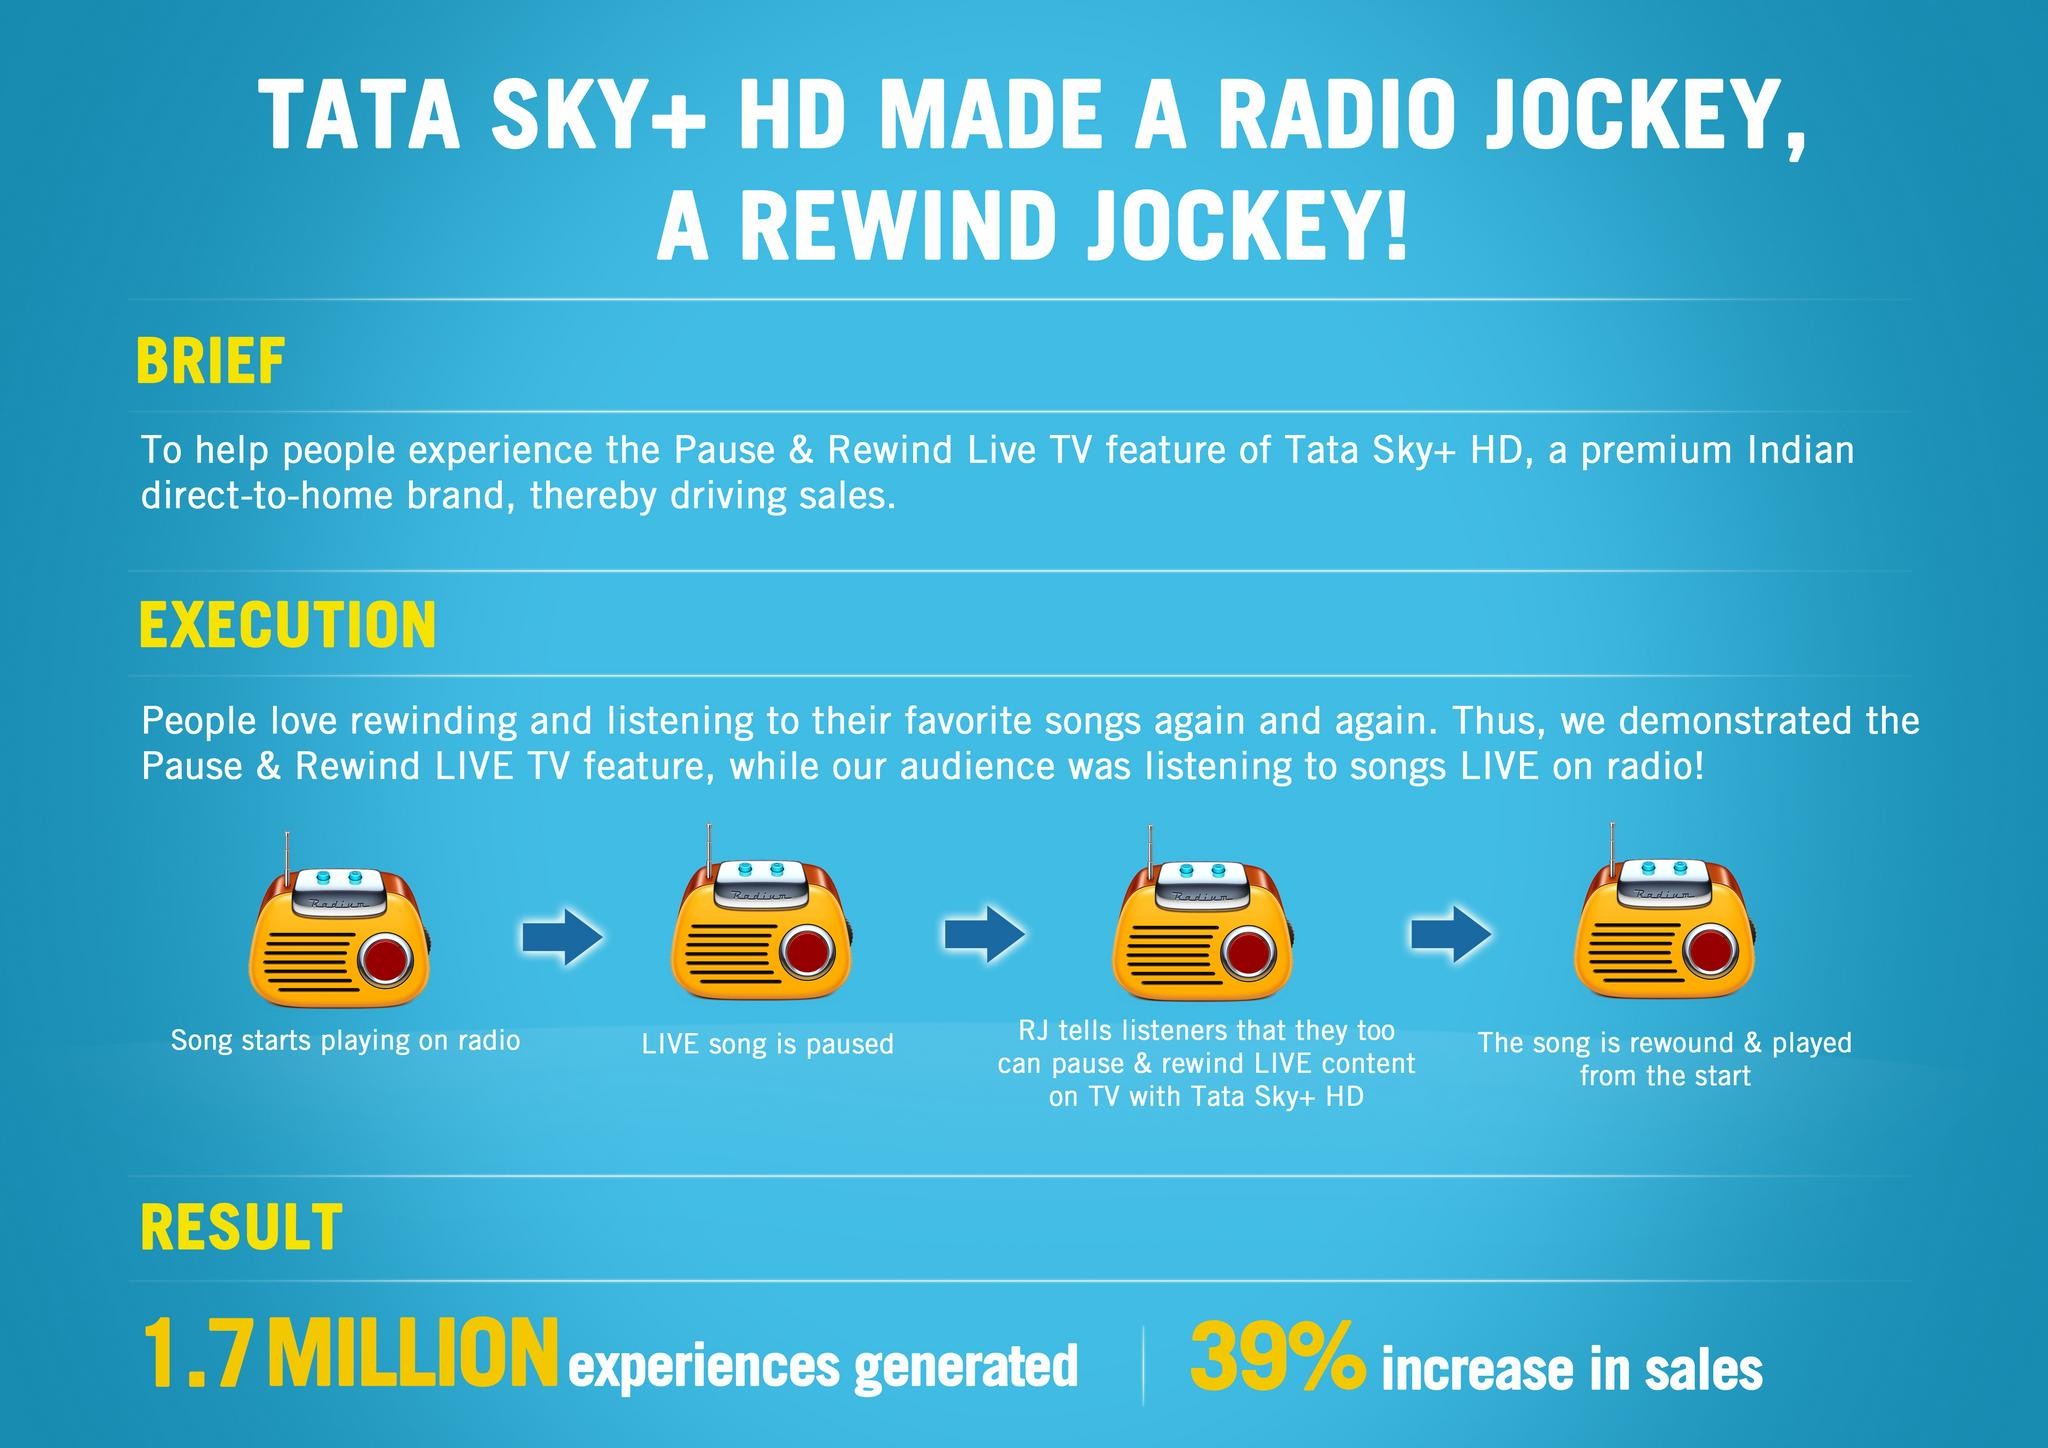 TATA SKY+ HD - WE MADE A RADIO JOCKEY, A REWIND JOCKEY!